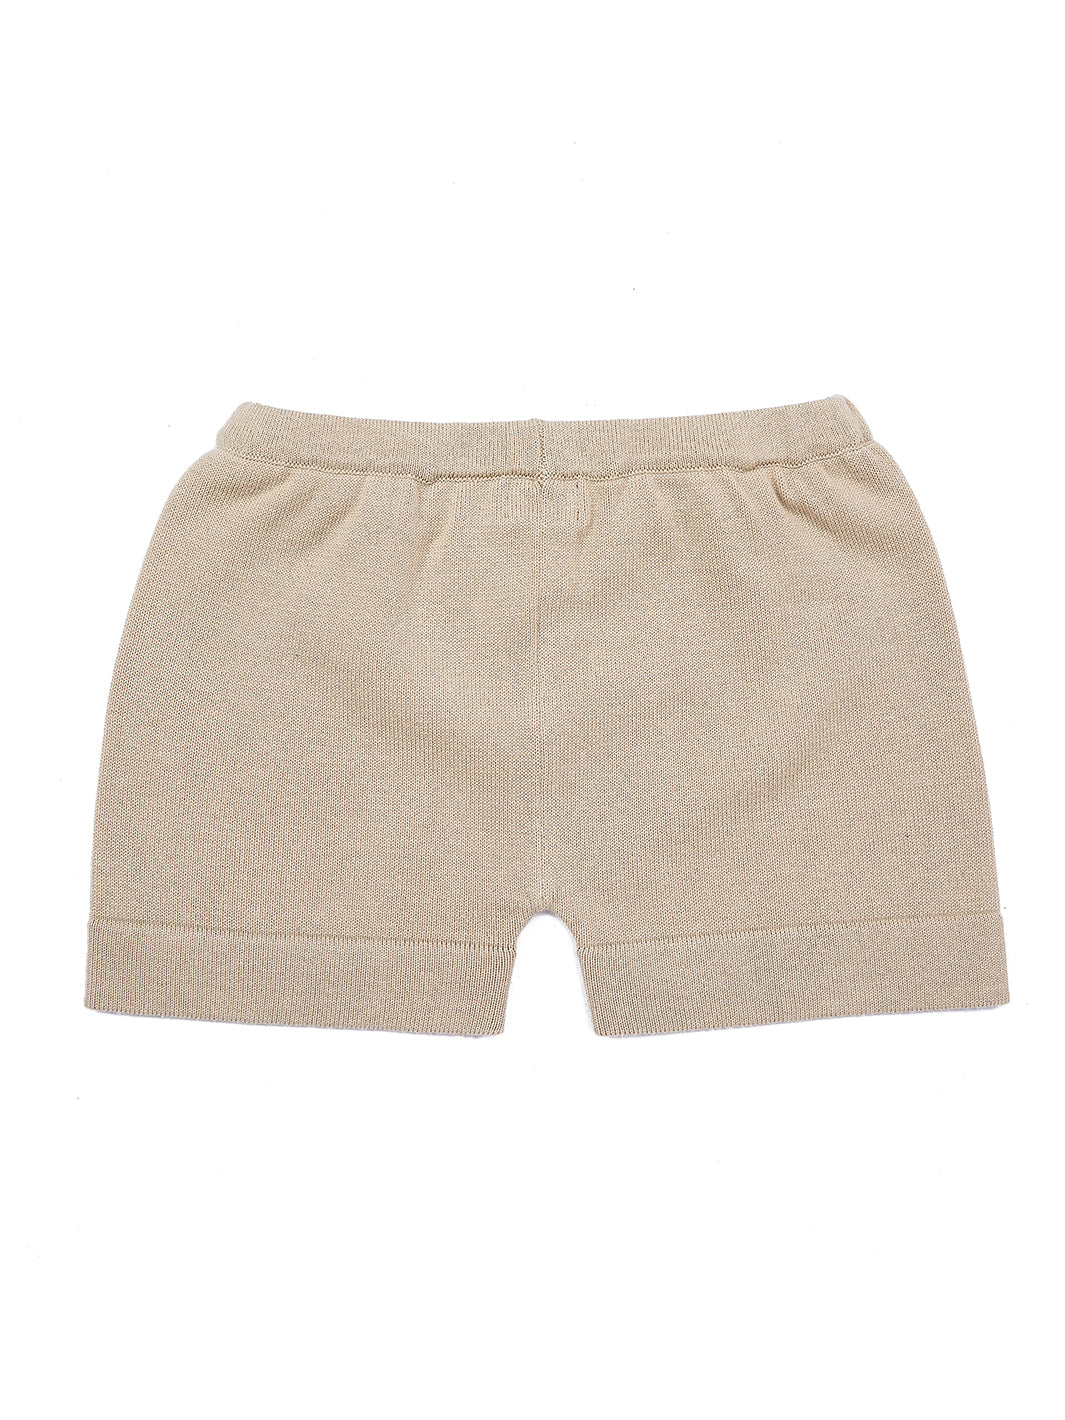 Button Shorts - Sand